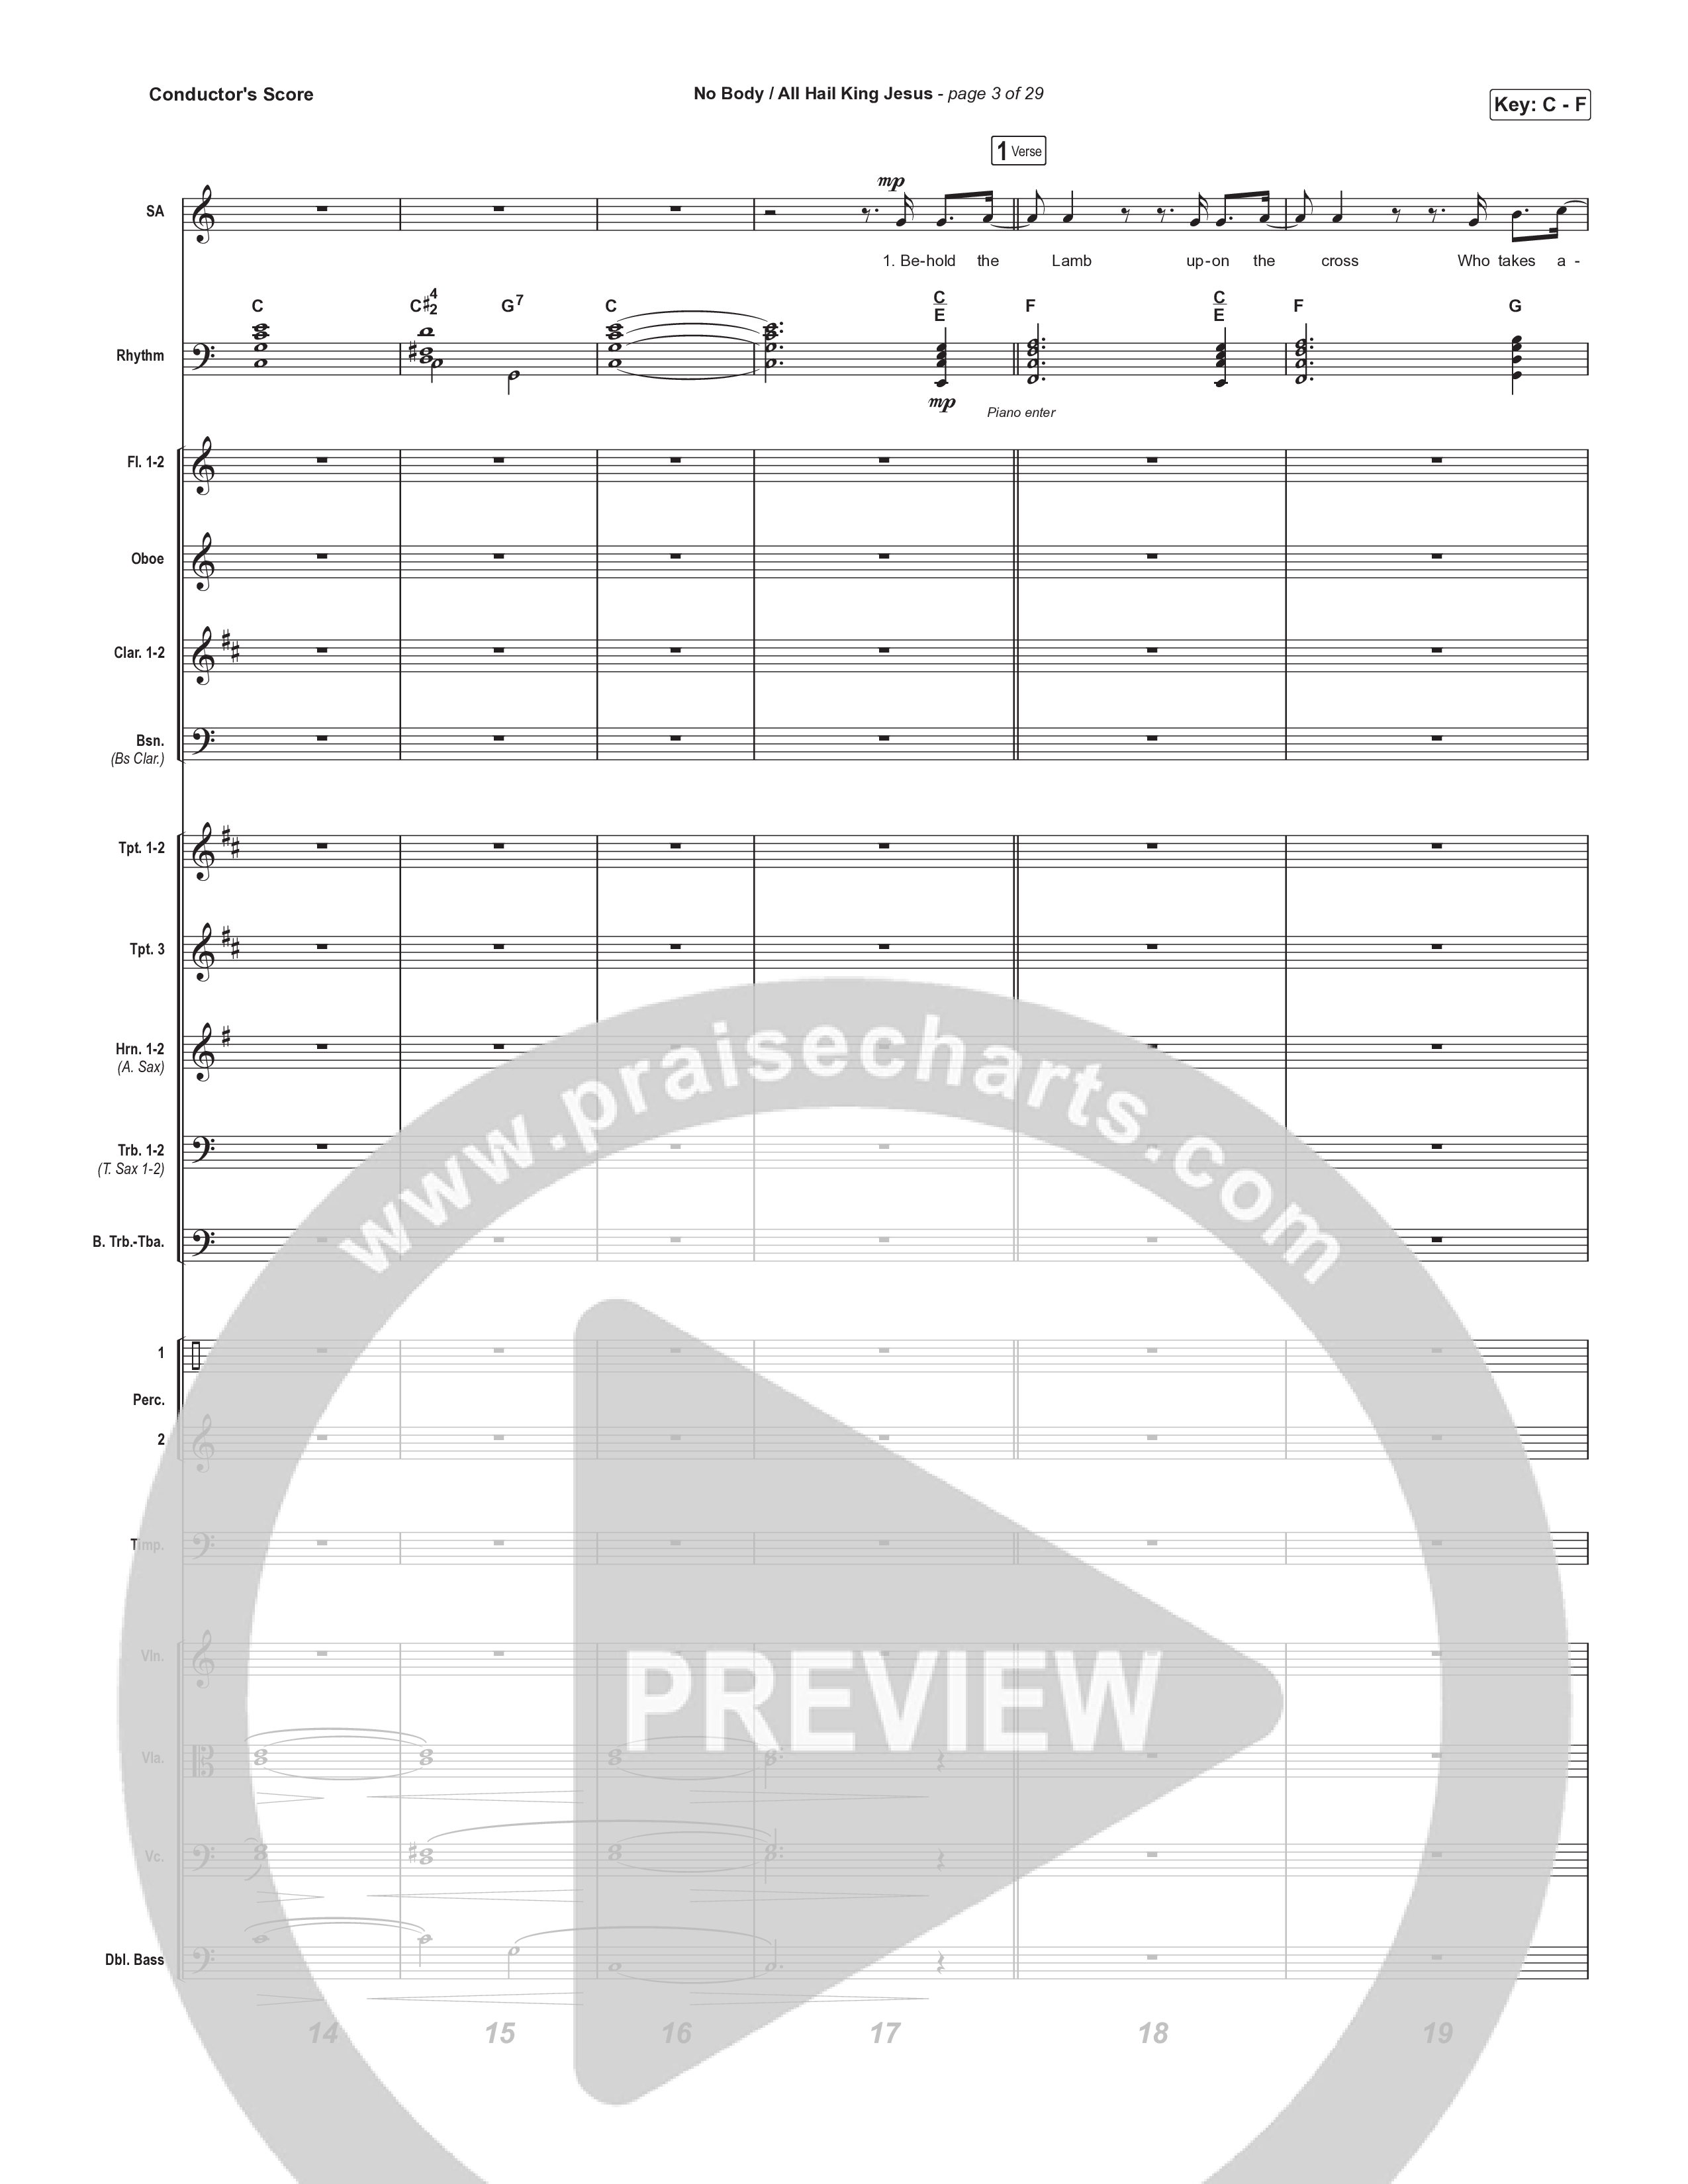 No Body / All Hail King Jesus Conductor's Score (Travis Cottrell / Skye Reedy / Arr. Mason Brown)